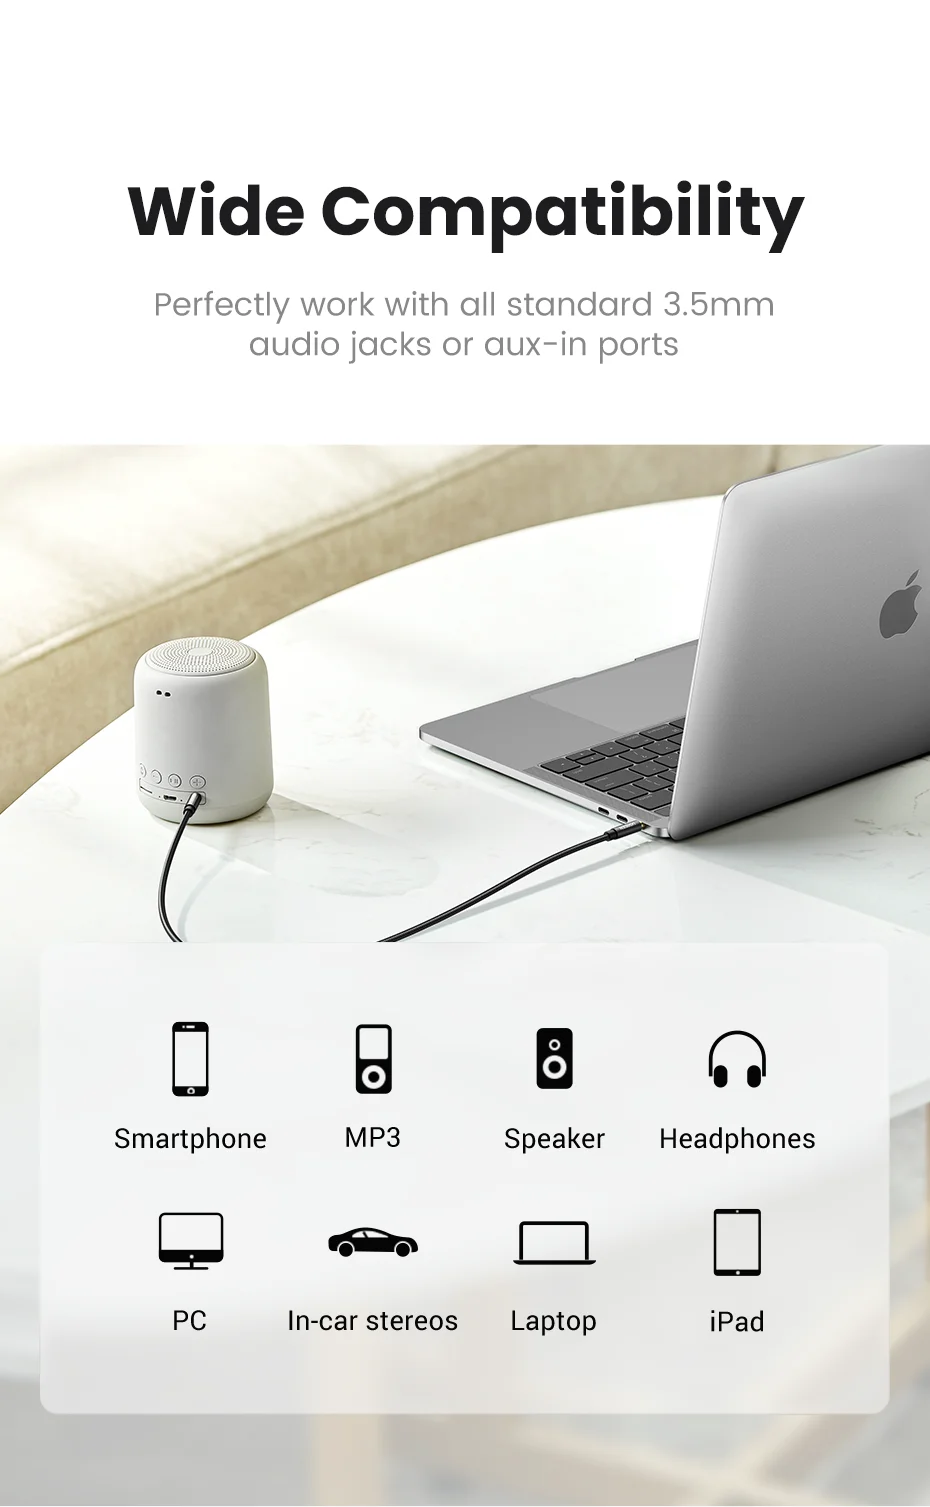 UGREEN AUX Cable Jack 3.5mm Audio Cable 3.5 MM Jack Speaker Cable for JBL Headphones Car Xiaomi Redmi 5 Plus Oneplus 5t AUX Cord